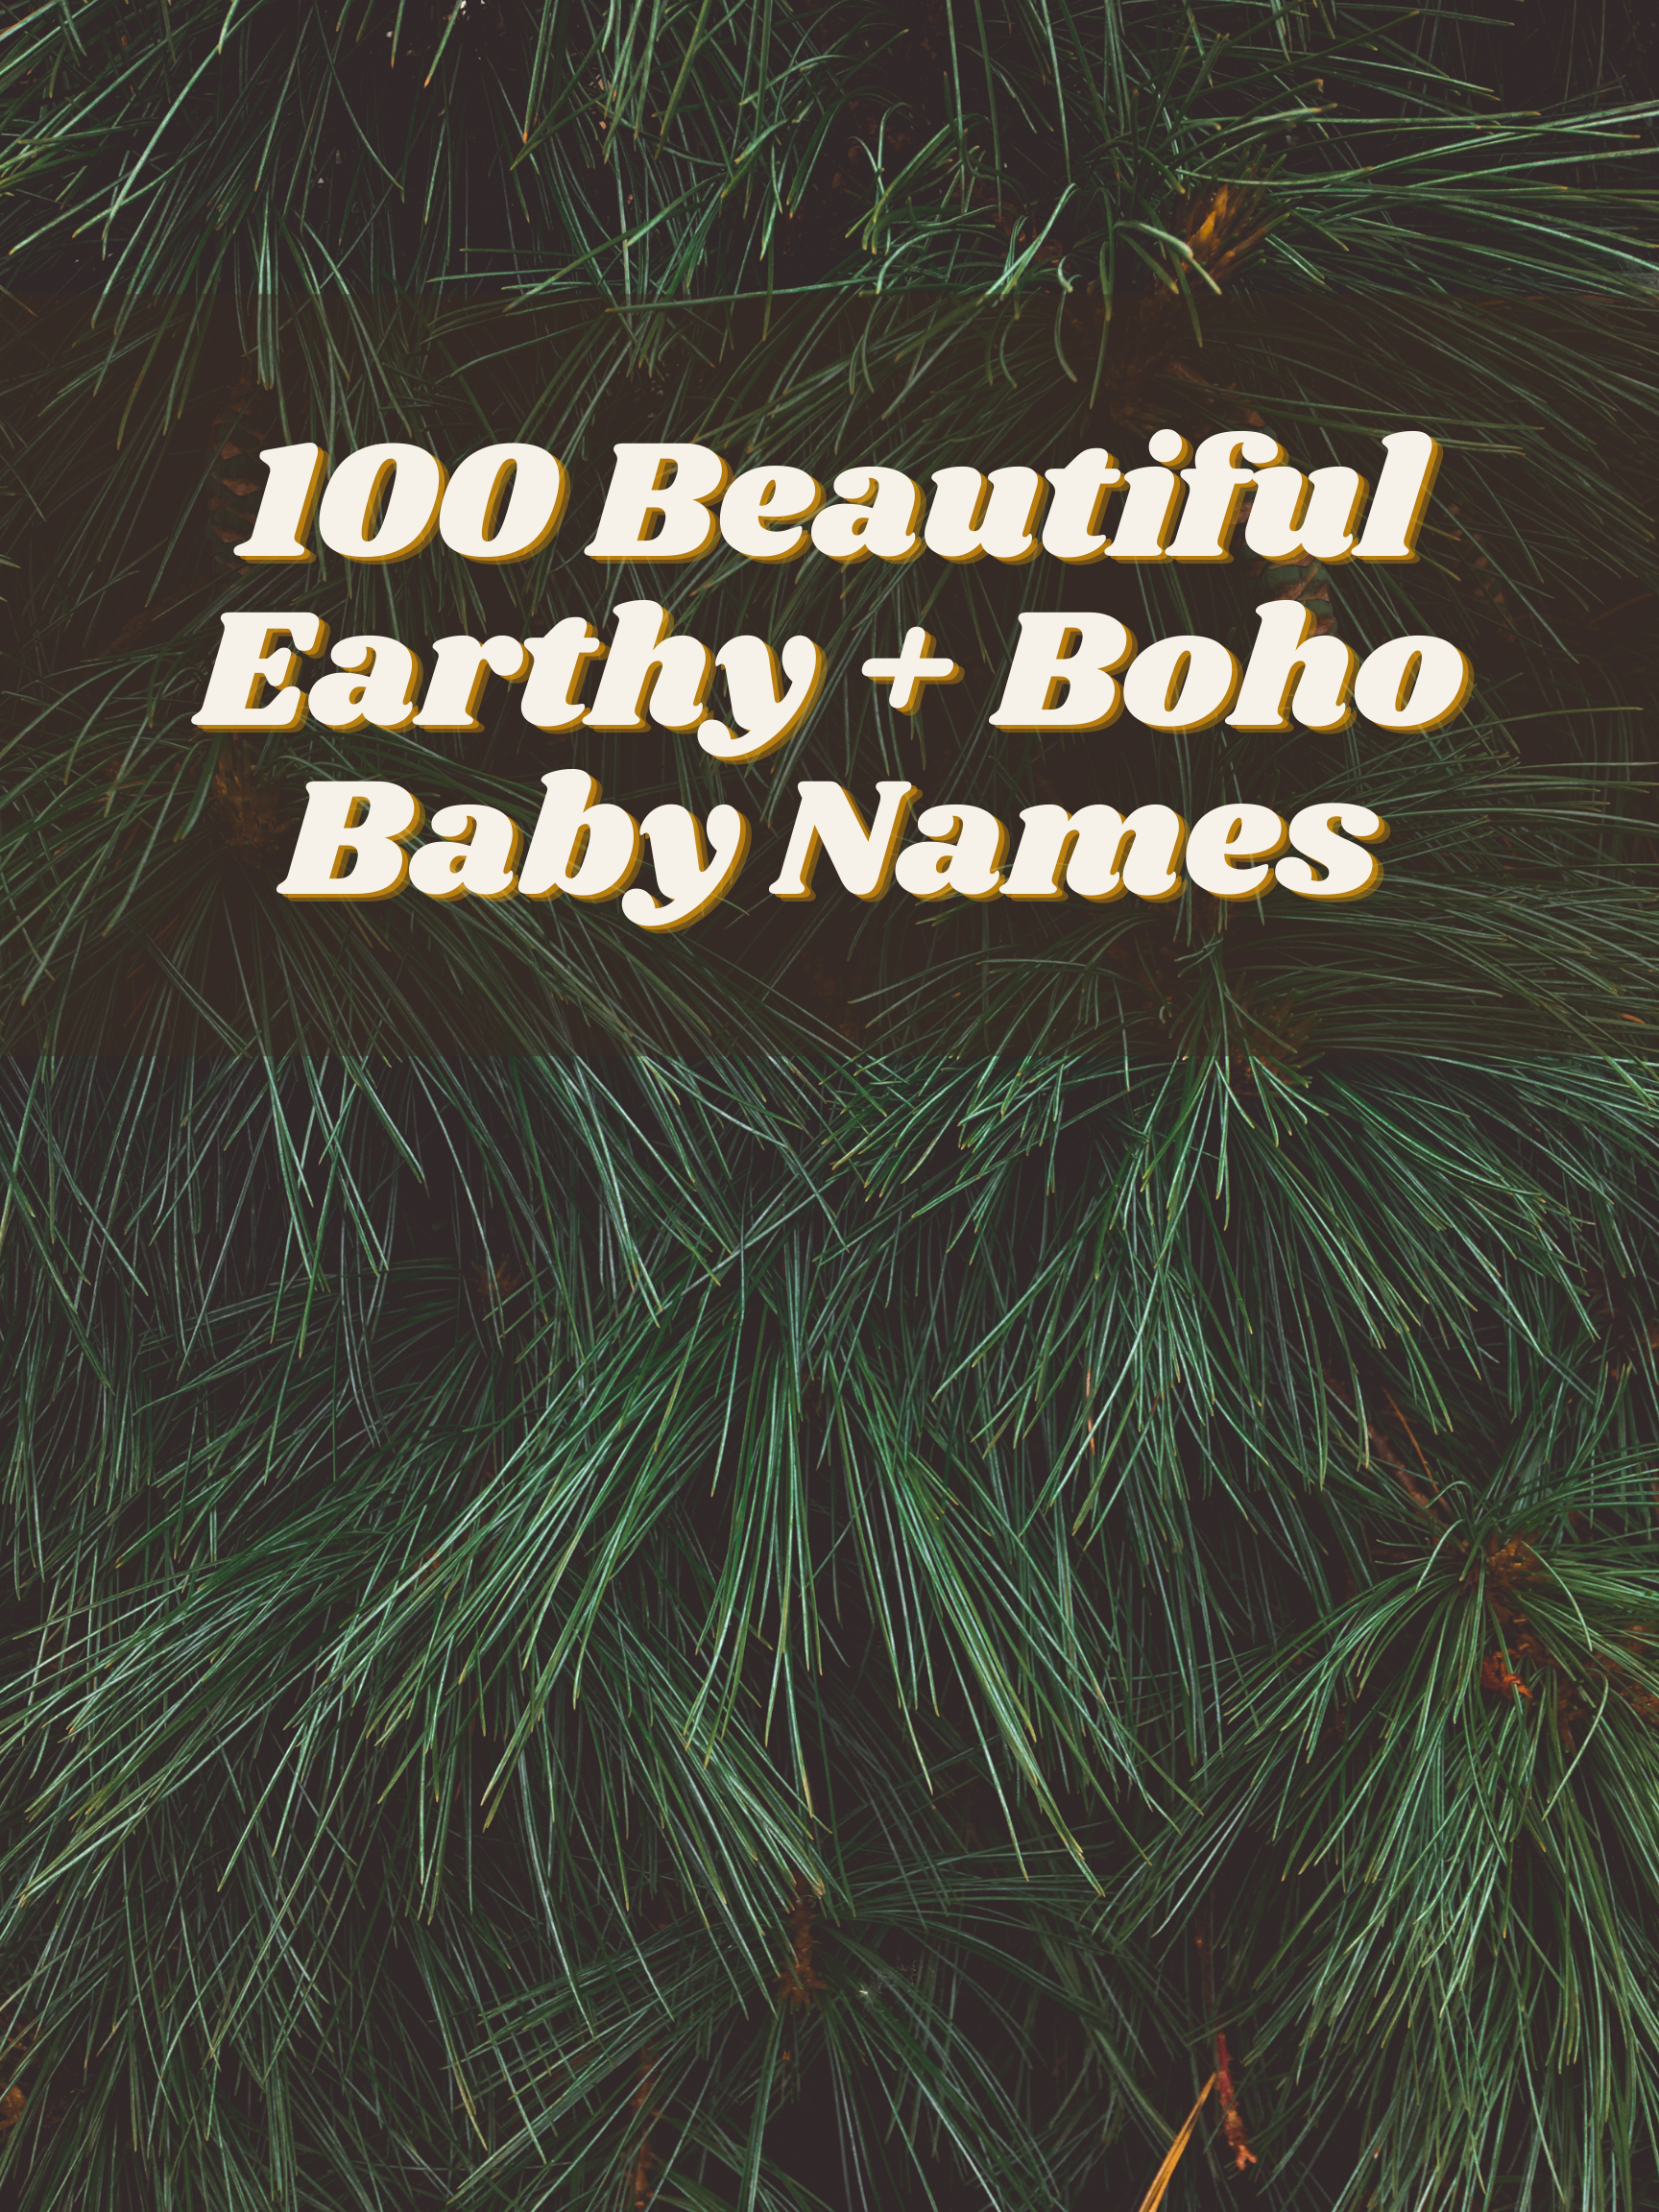 100 Beautiful Earthy + Boho Baby Names for 2018